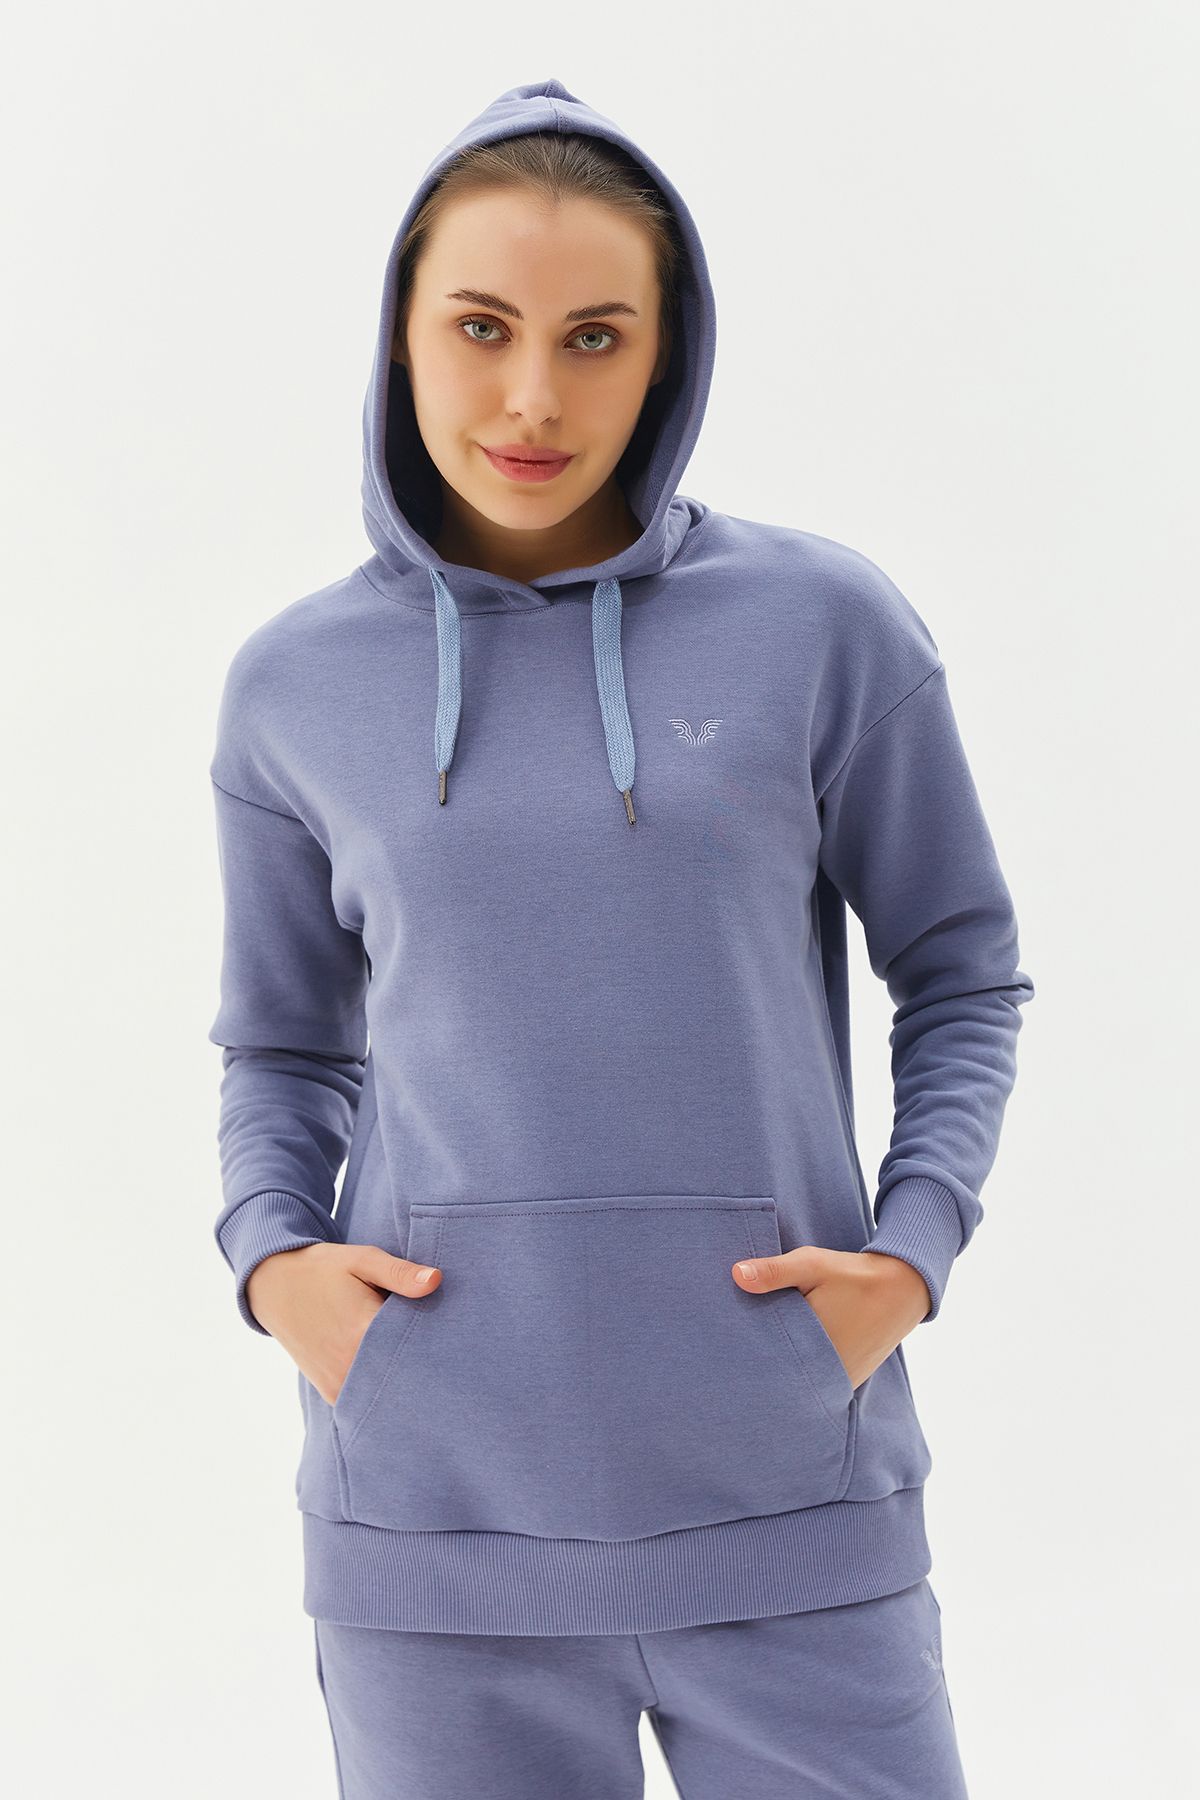 bilcee Kadın Mavi Kapüşonlu Kanguru Cepli Pamuklu Spor Düz Renk Sweatshirt 8785